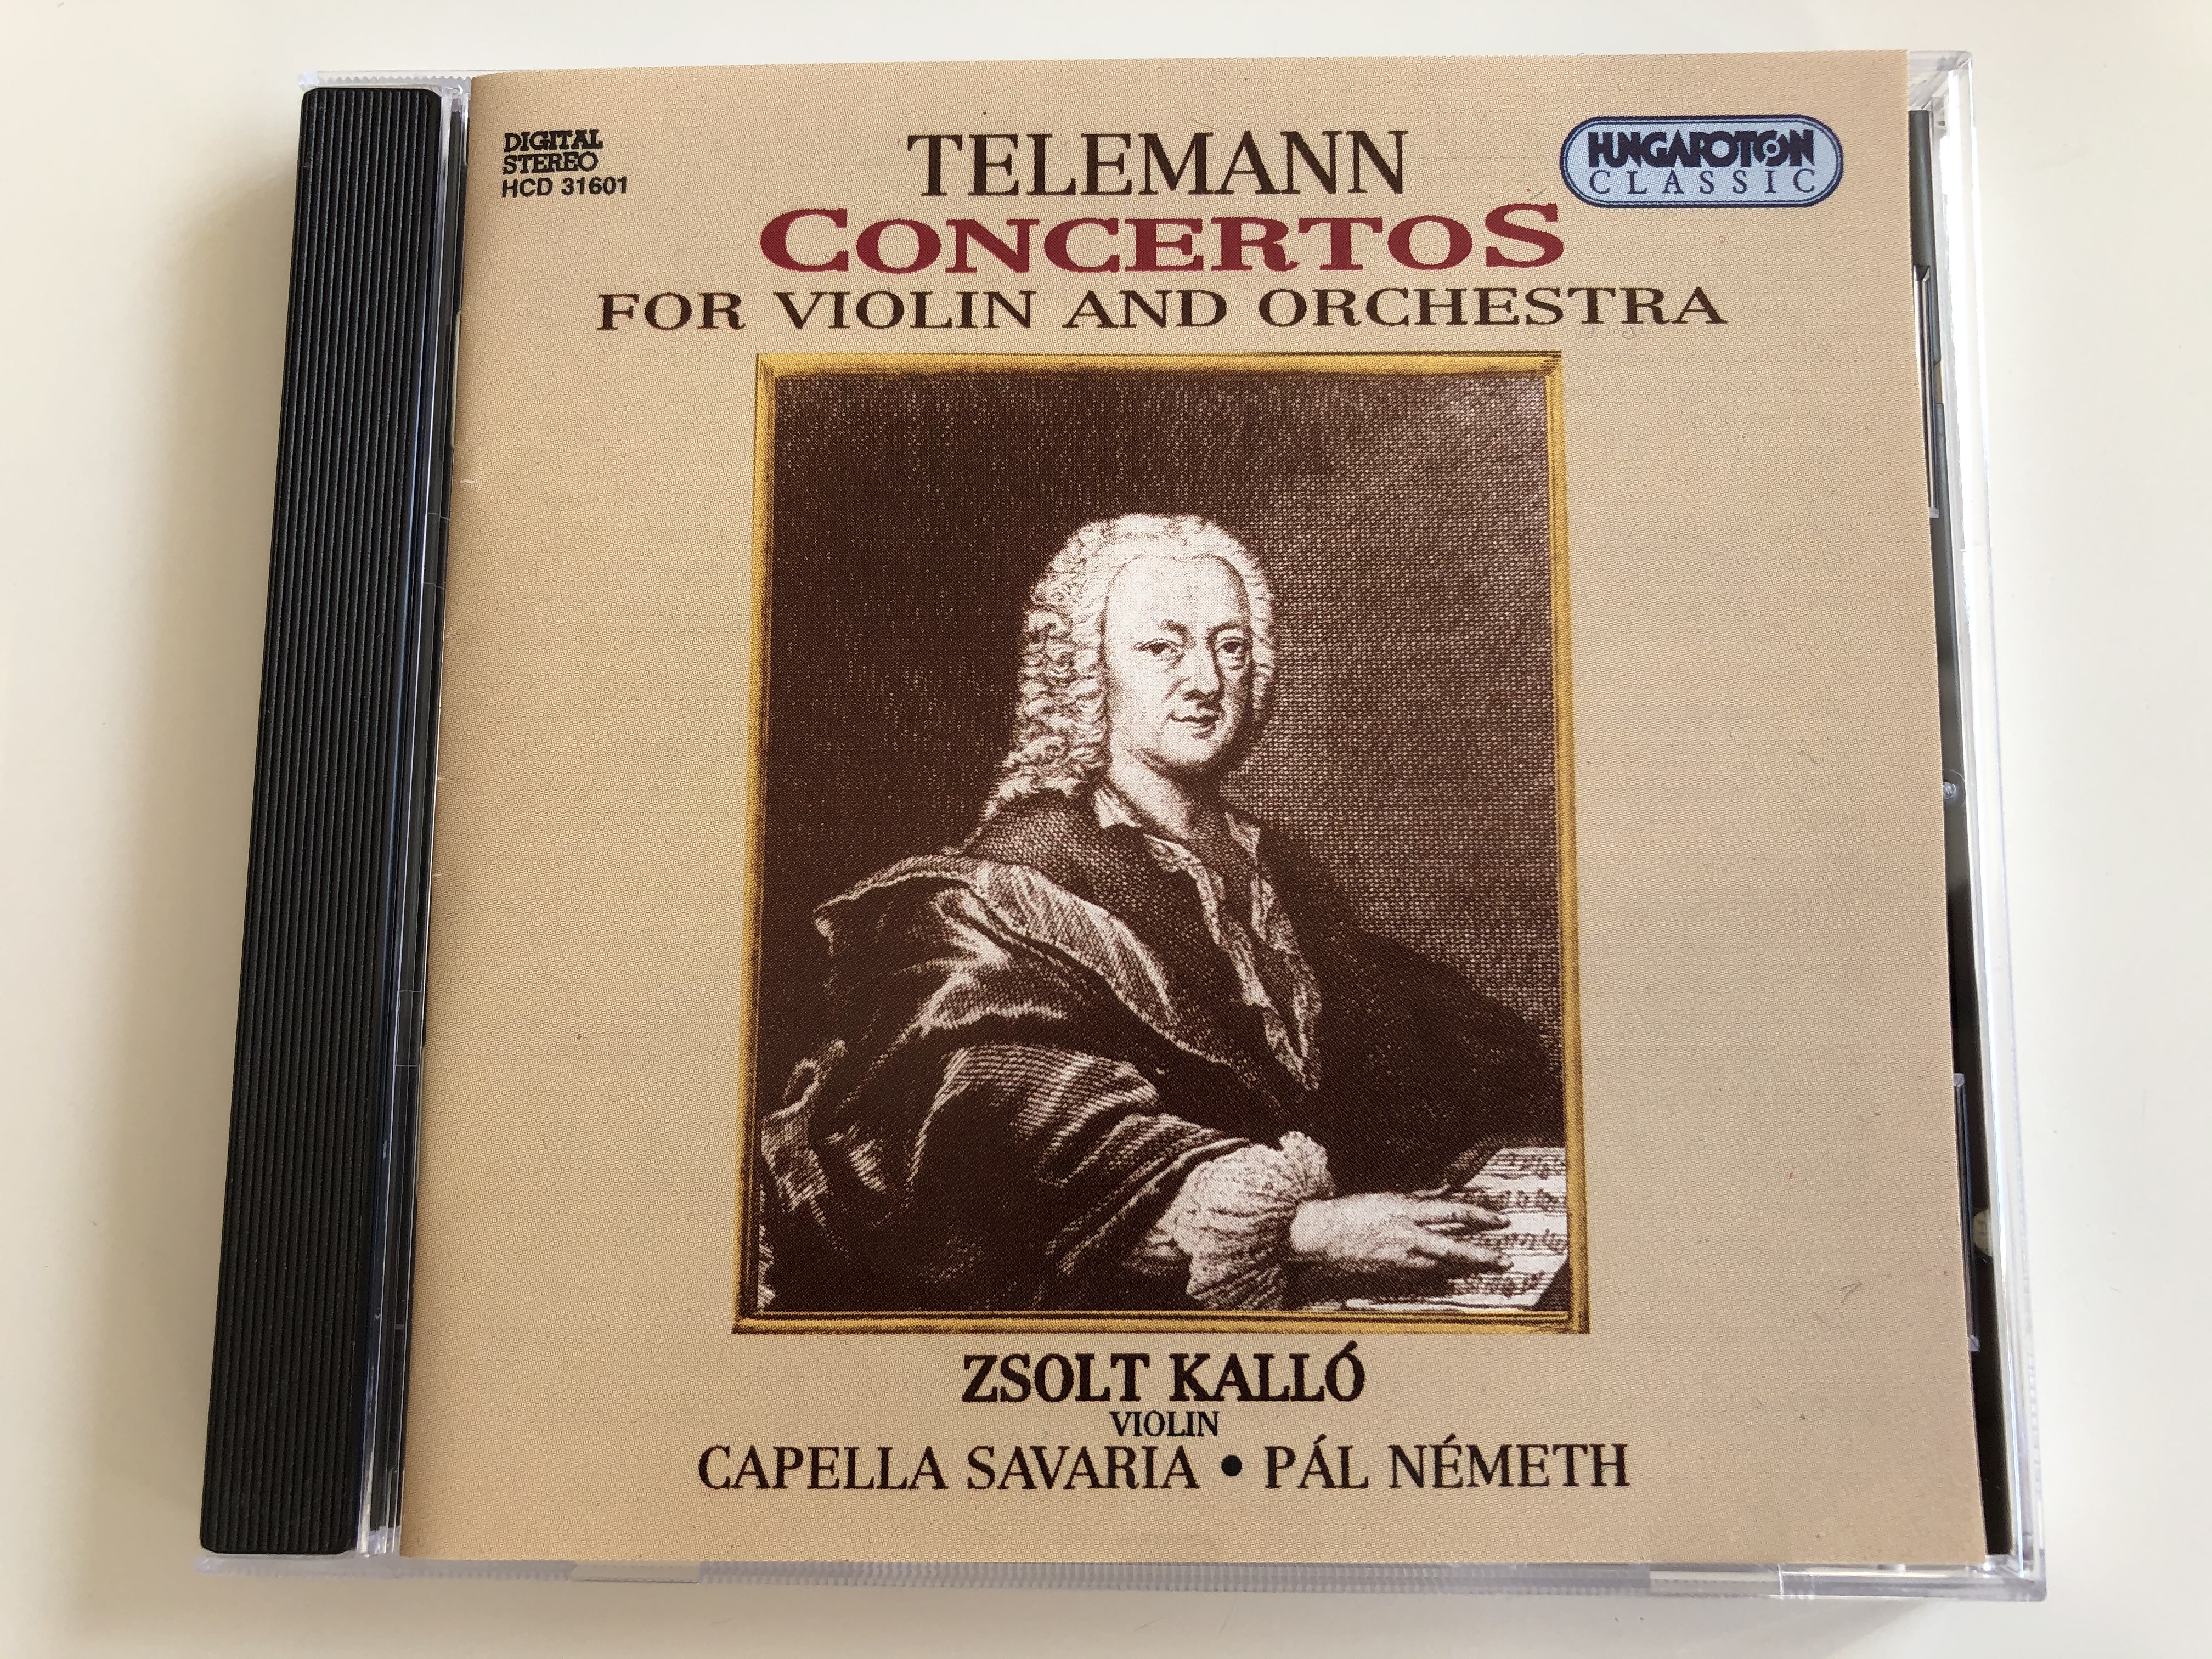 telemann-concertos-for-violin-and-orchestra-zsolt-kallo-violin-capella-savaria-pal-nemeth-hungaroton-classic-audio-cd-1995-stereo-hcd-31601-1-.jpg